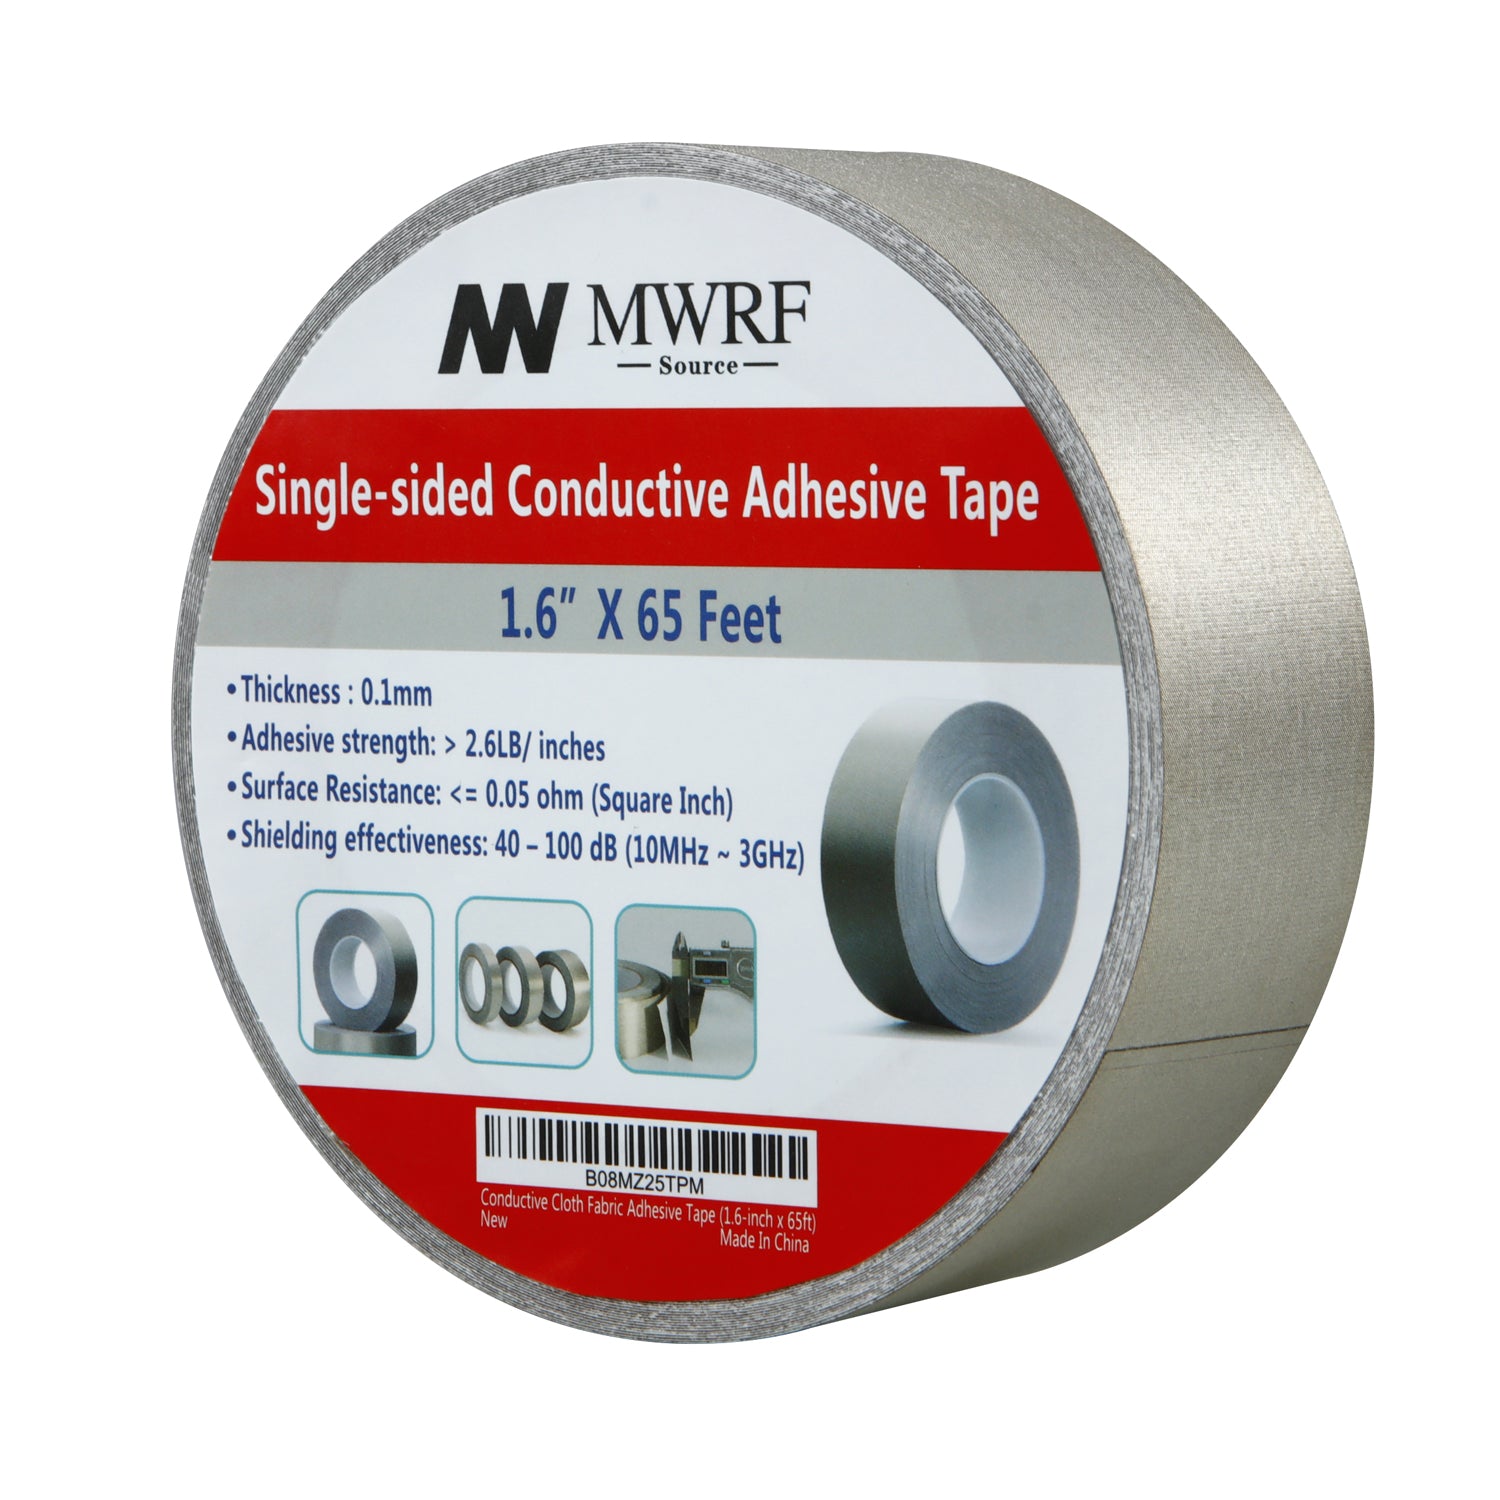 Conductive Cloth Fabric Adhesive Tapes – MWRF Source